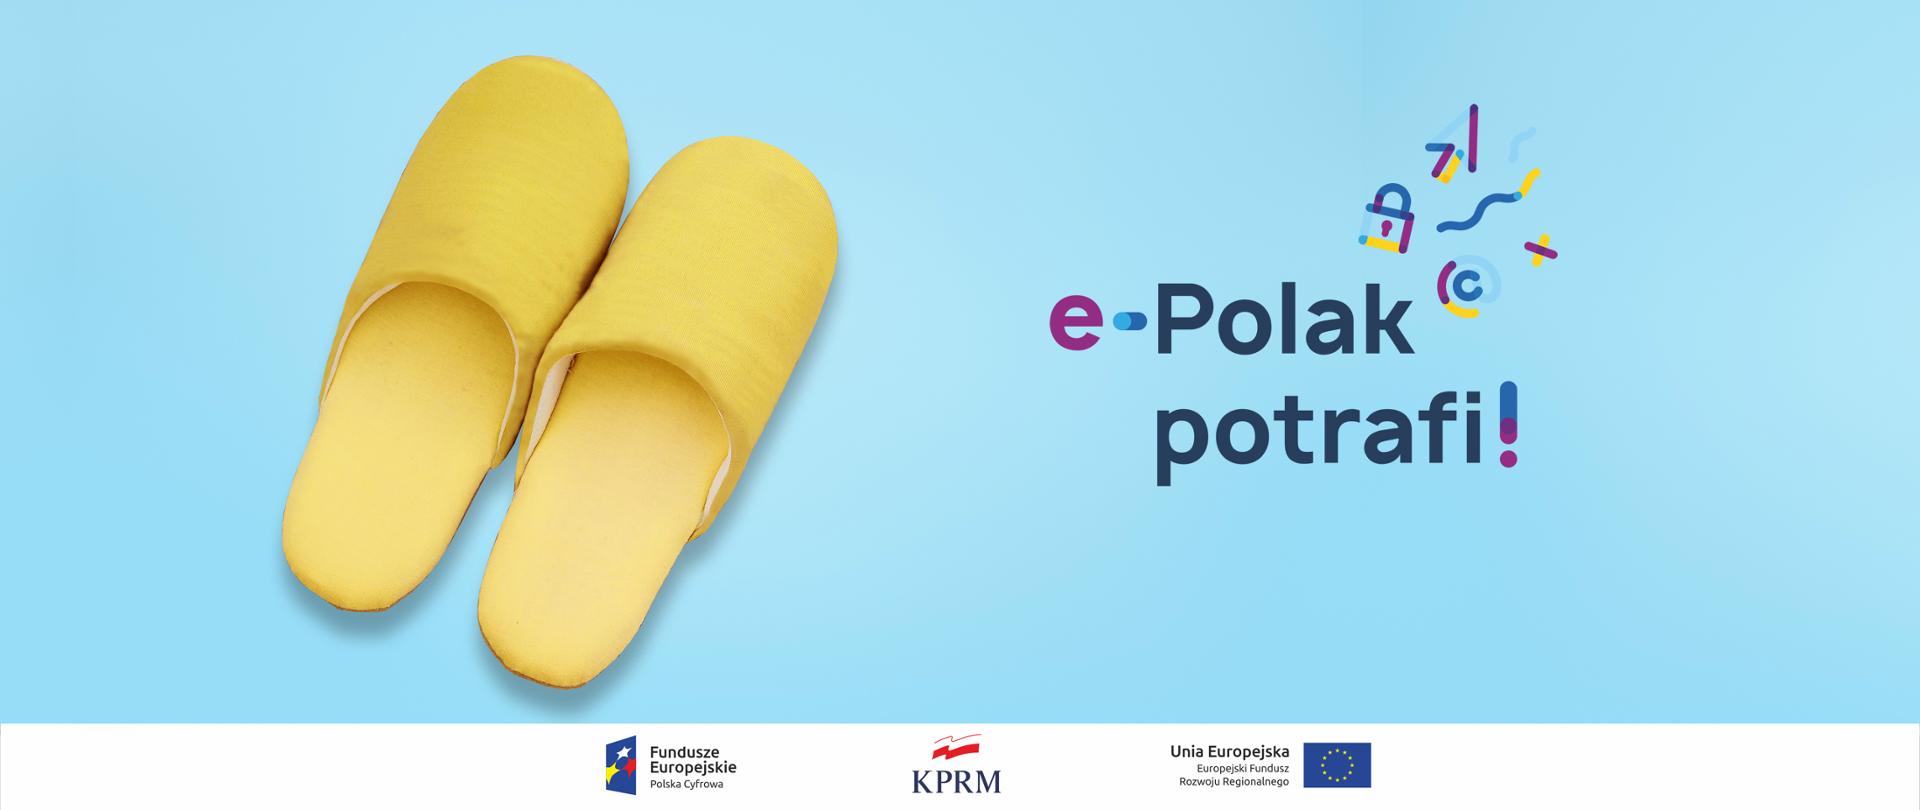 Żółte kapcie na błękitnym tle. Z prawej strony logo kampanii e-Polak potrafi!